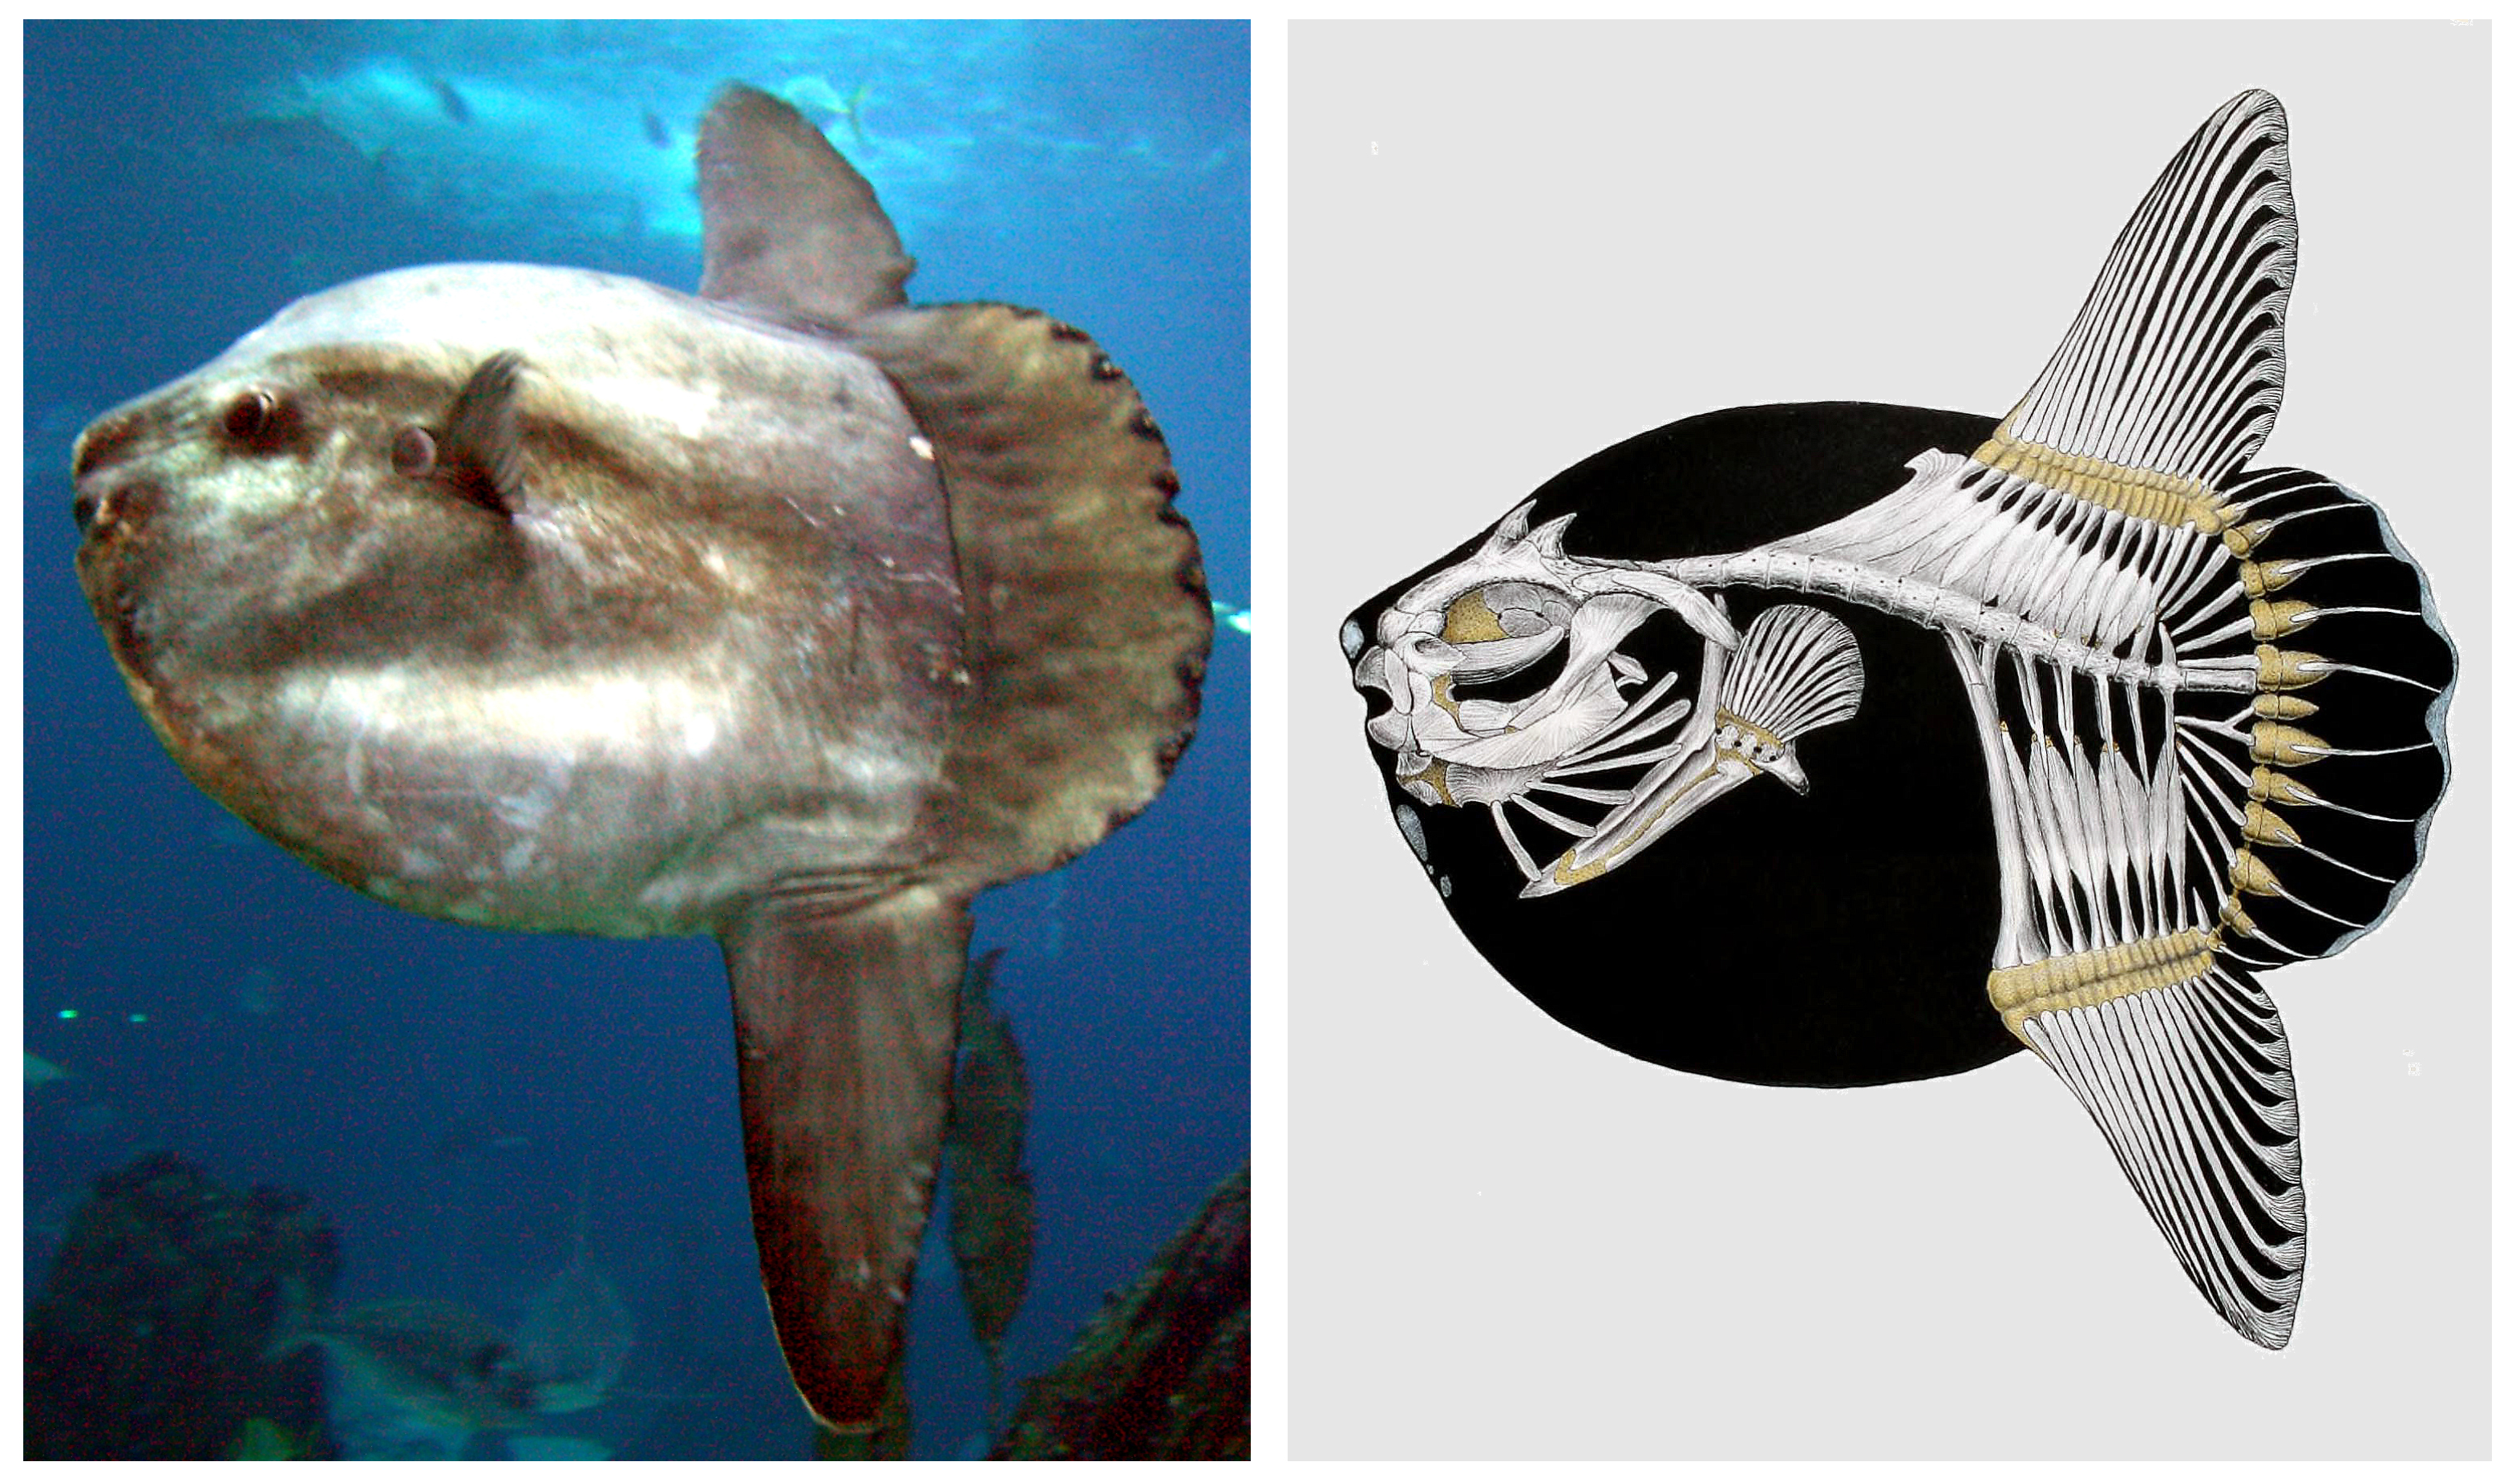 File:Mola mola and skeleton.jpg - Wikimedia Commons